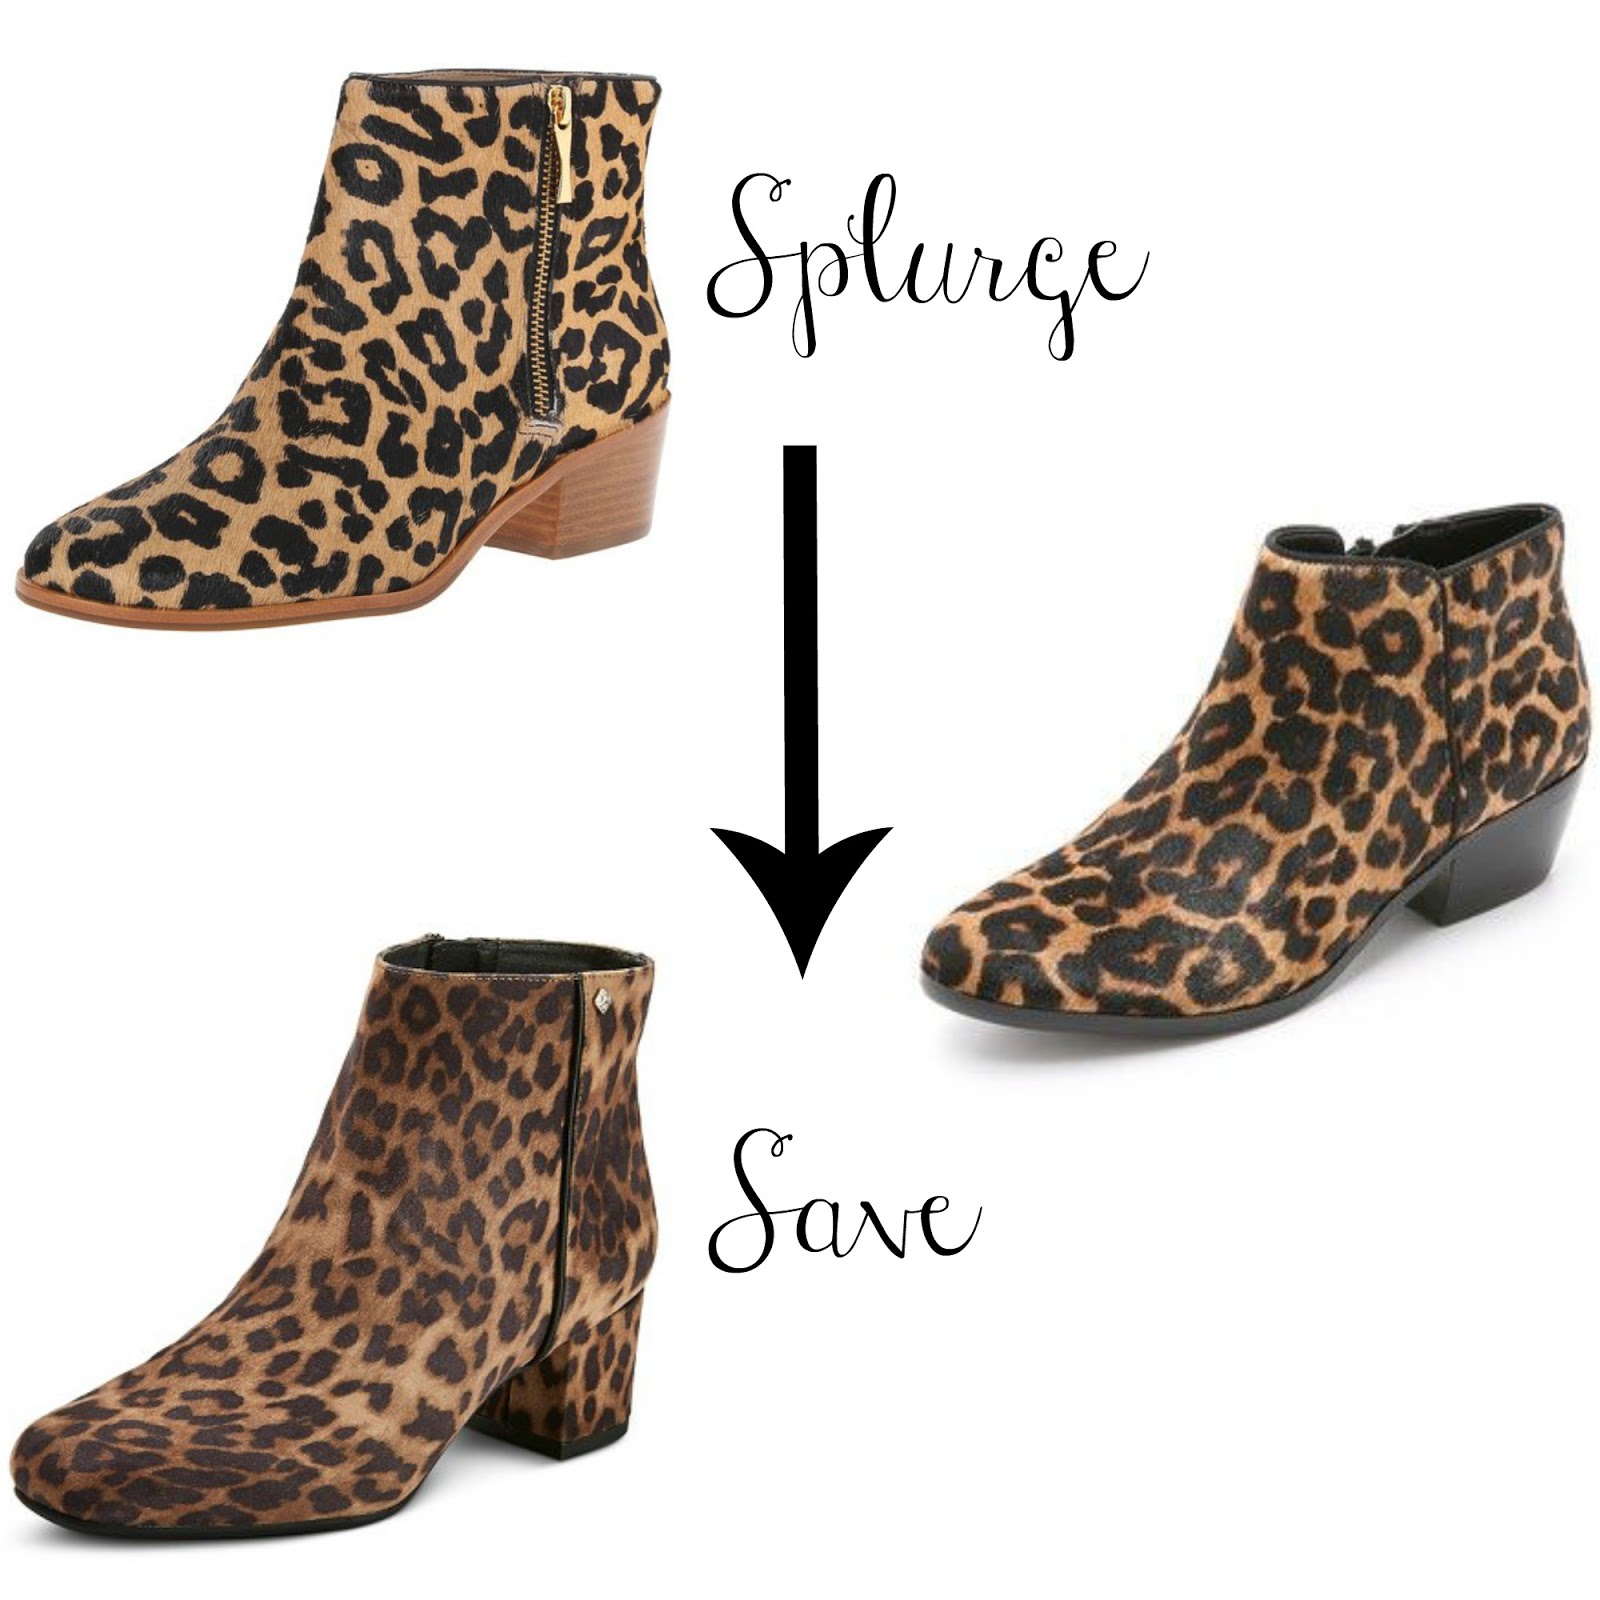 Leopard Booties: From Splurge to Save - C'est Bien by Heather Bien